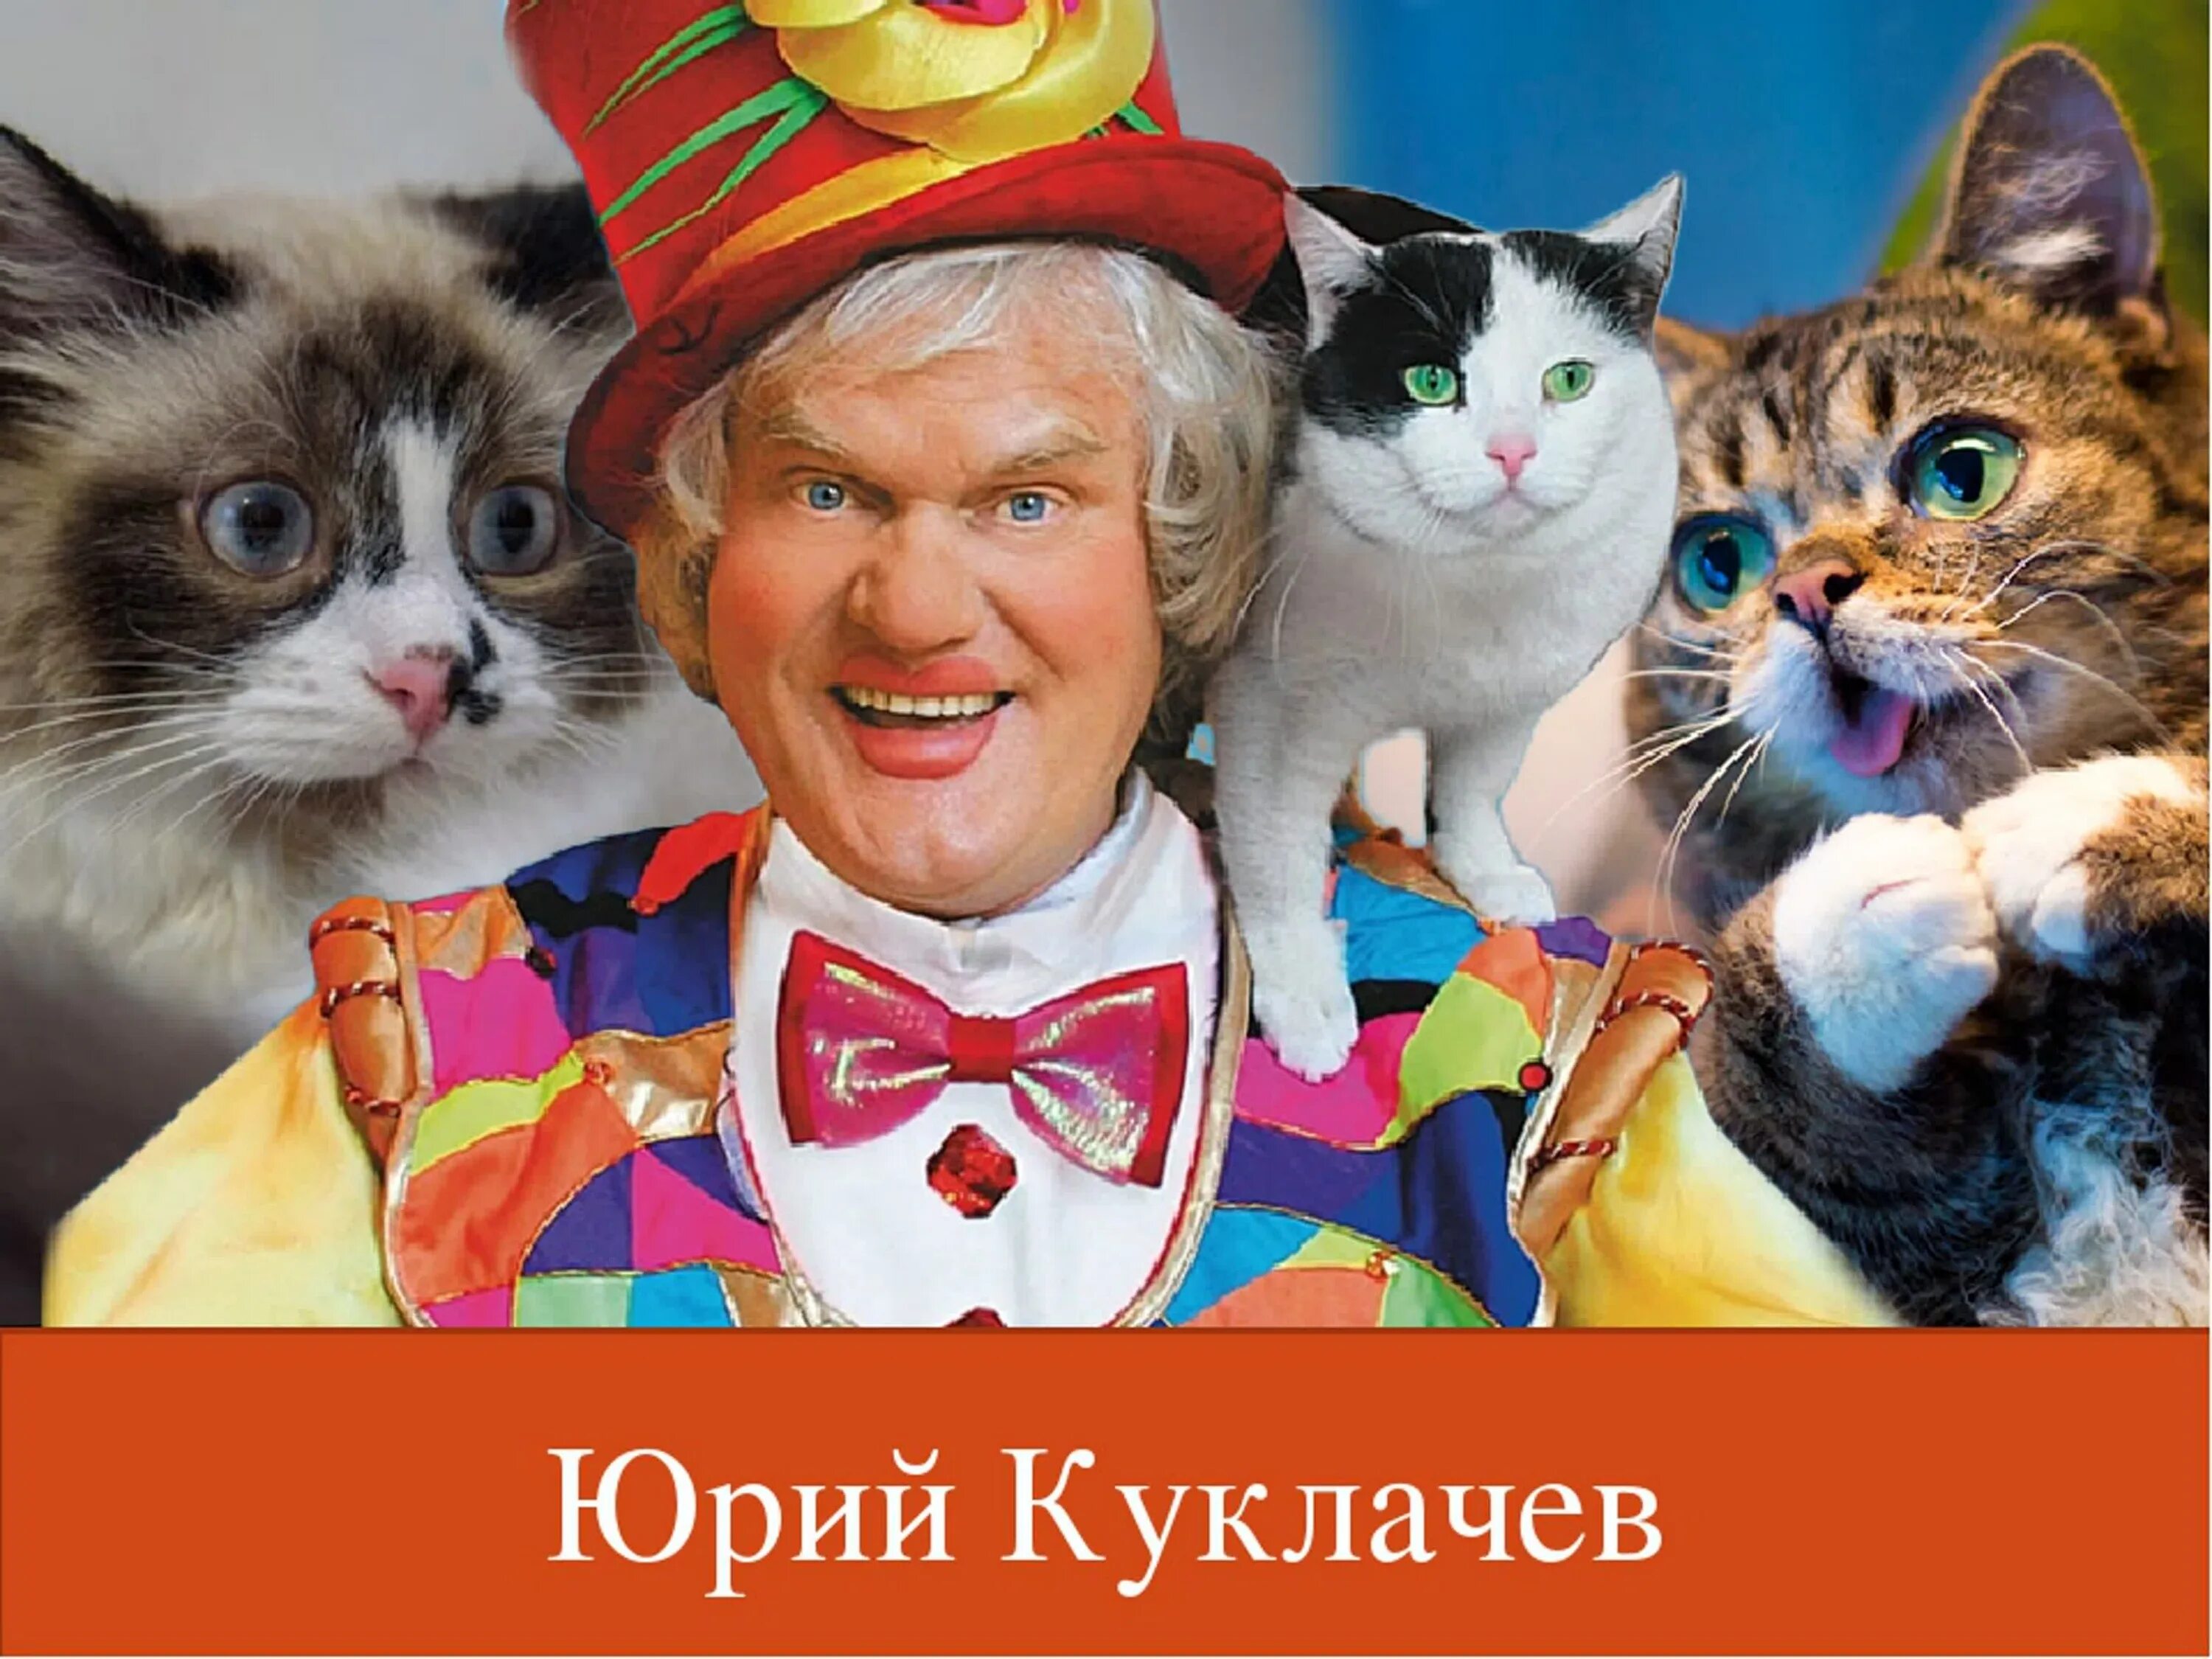 Куклачев дрессировщик кошек. Кошки Юрия Куклачева. Театр кошек Юрия Куклачева.